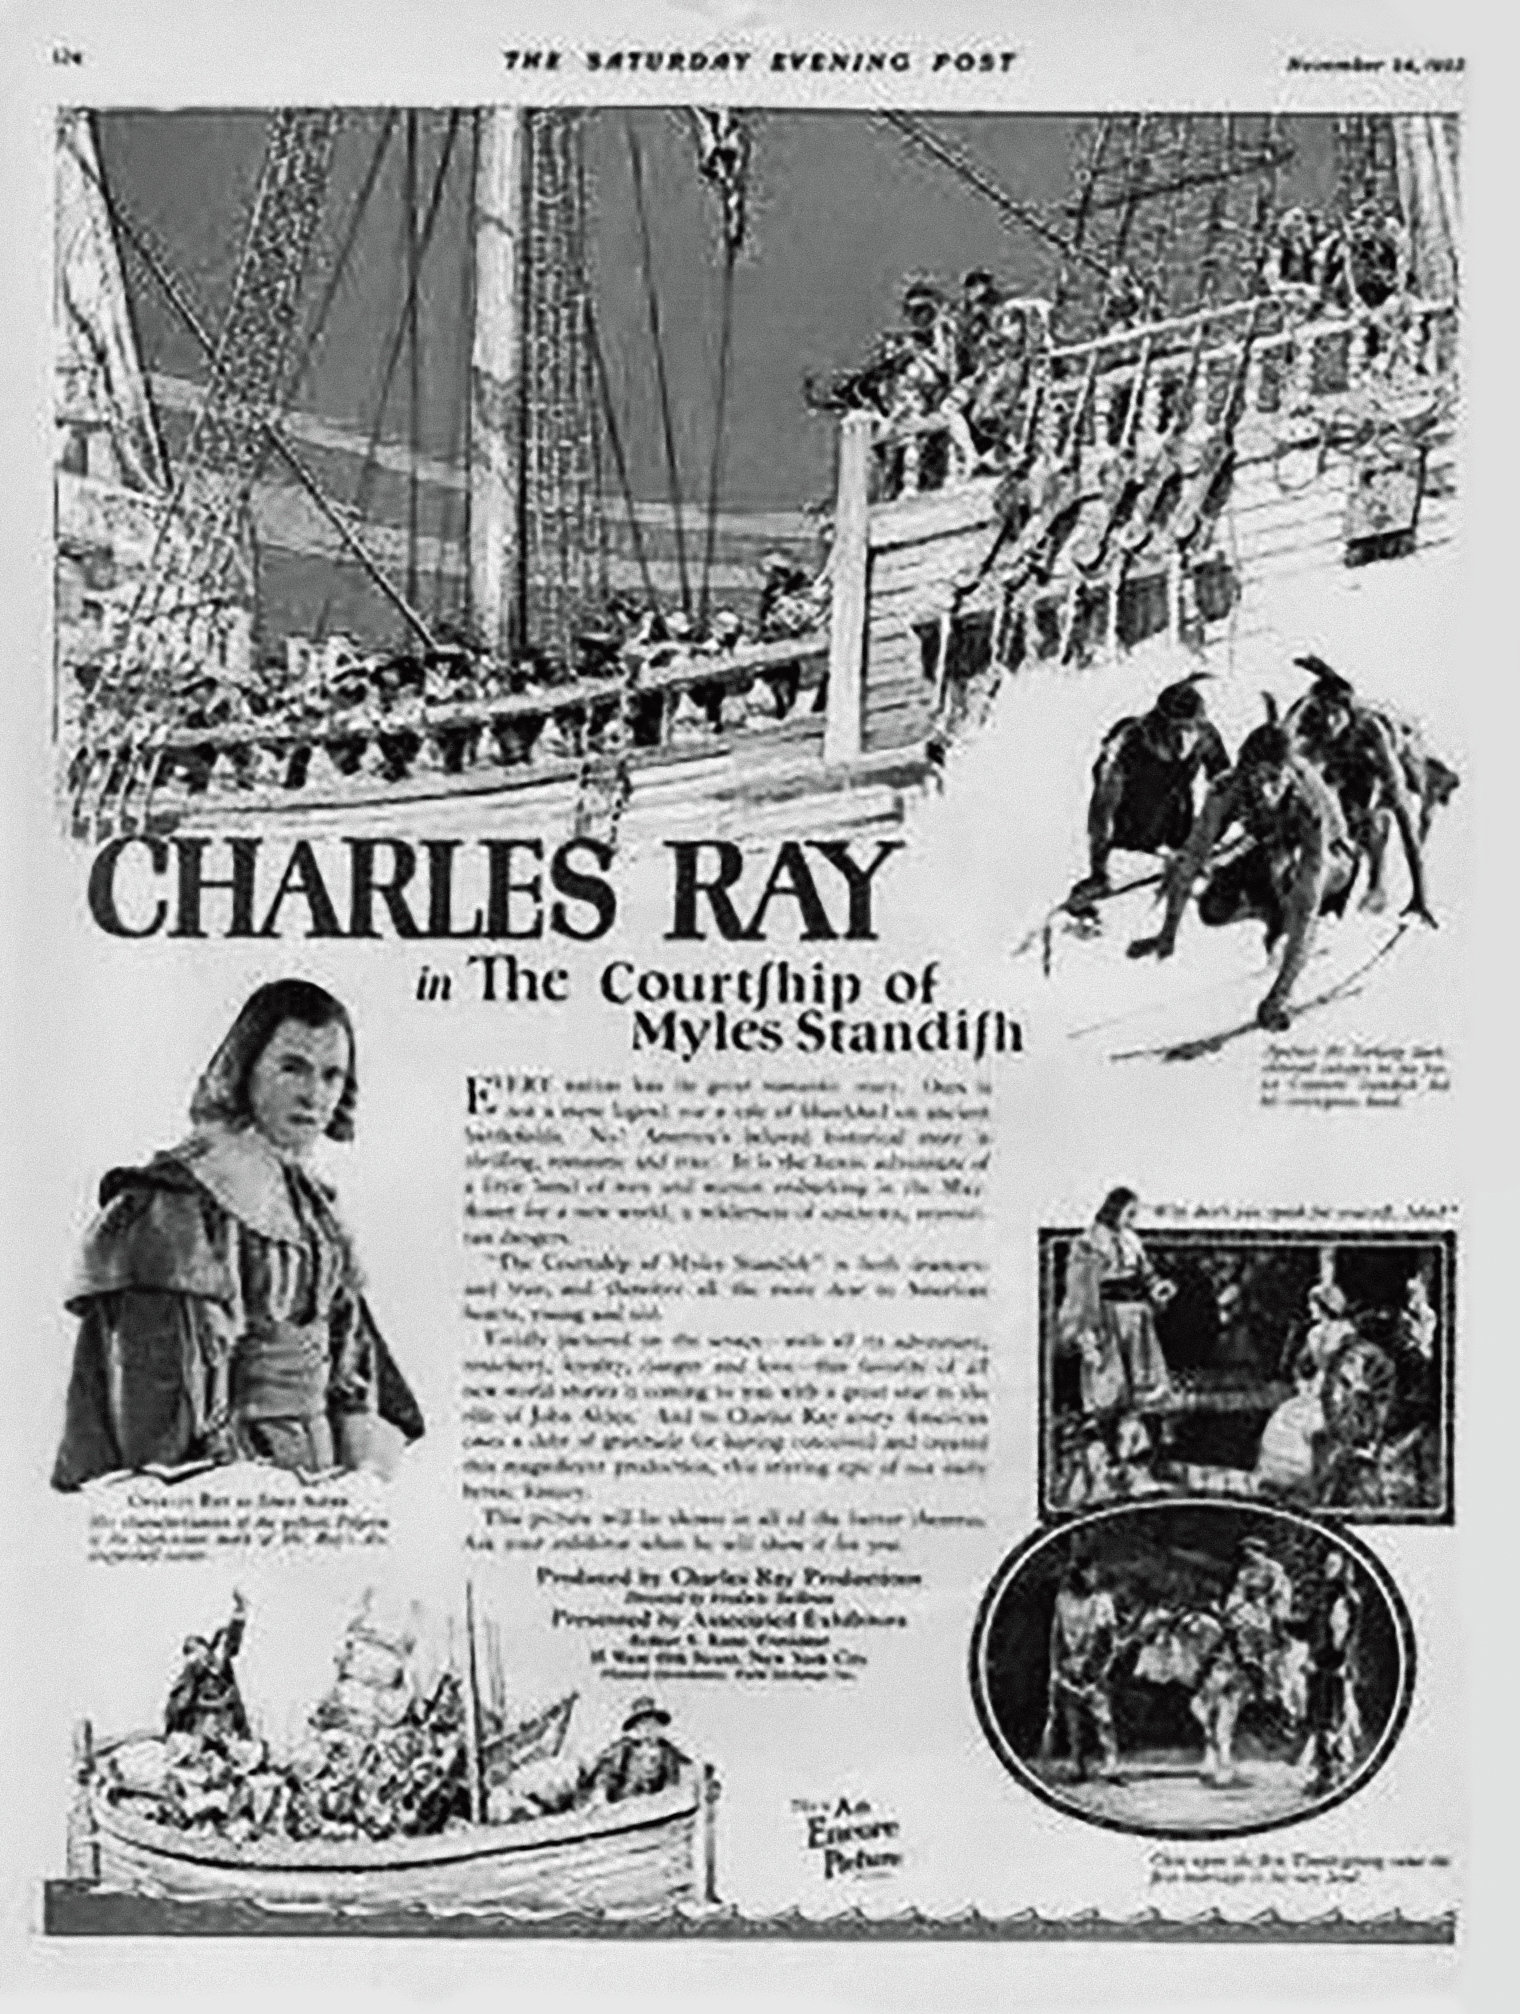 Charles Ray Films